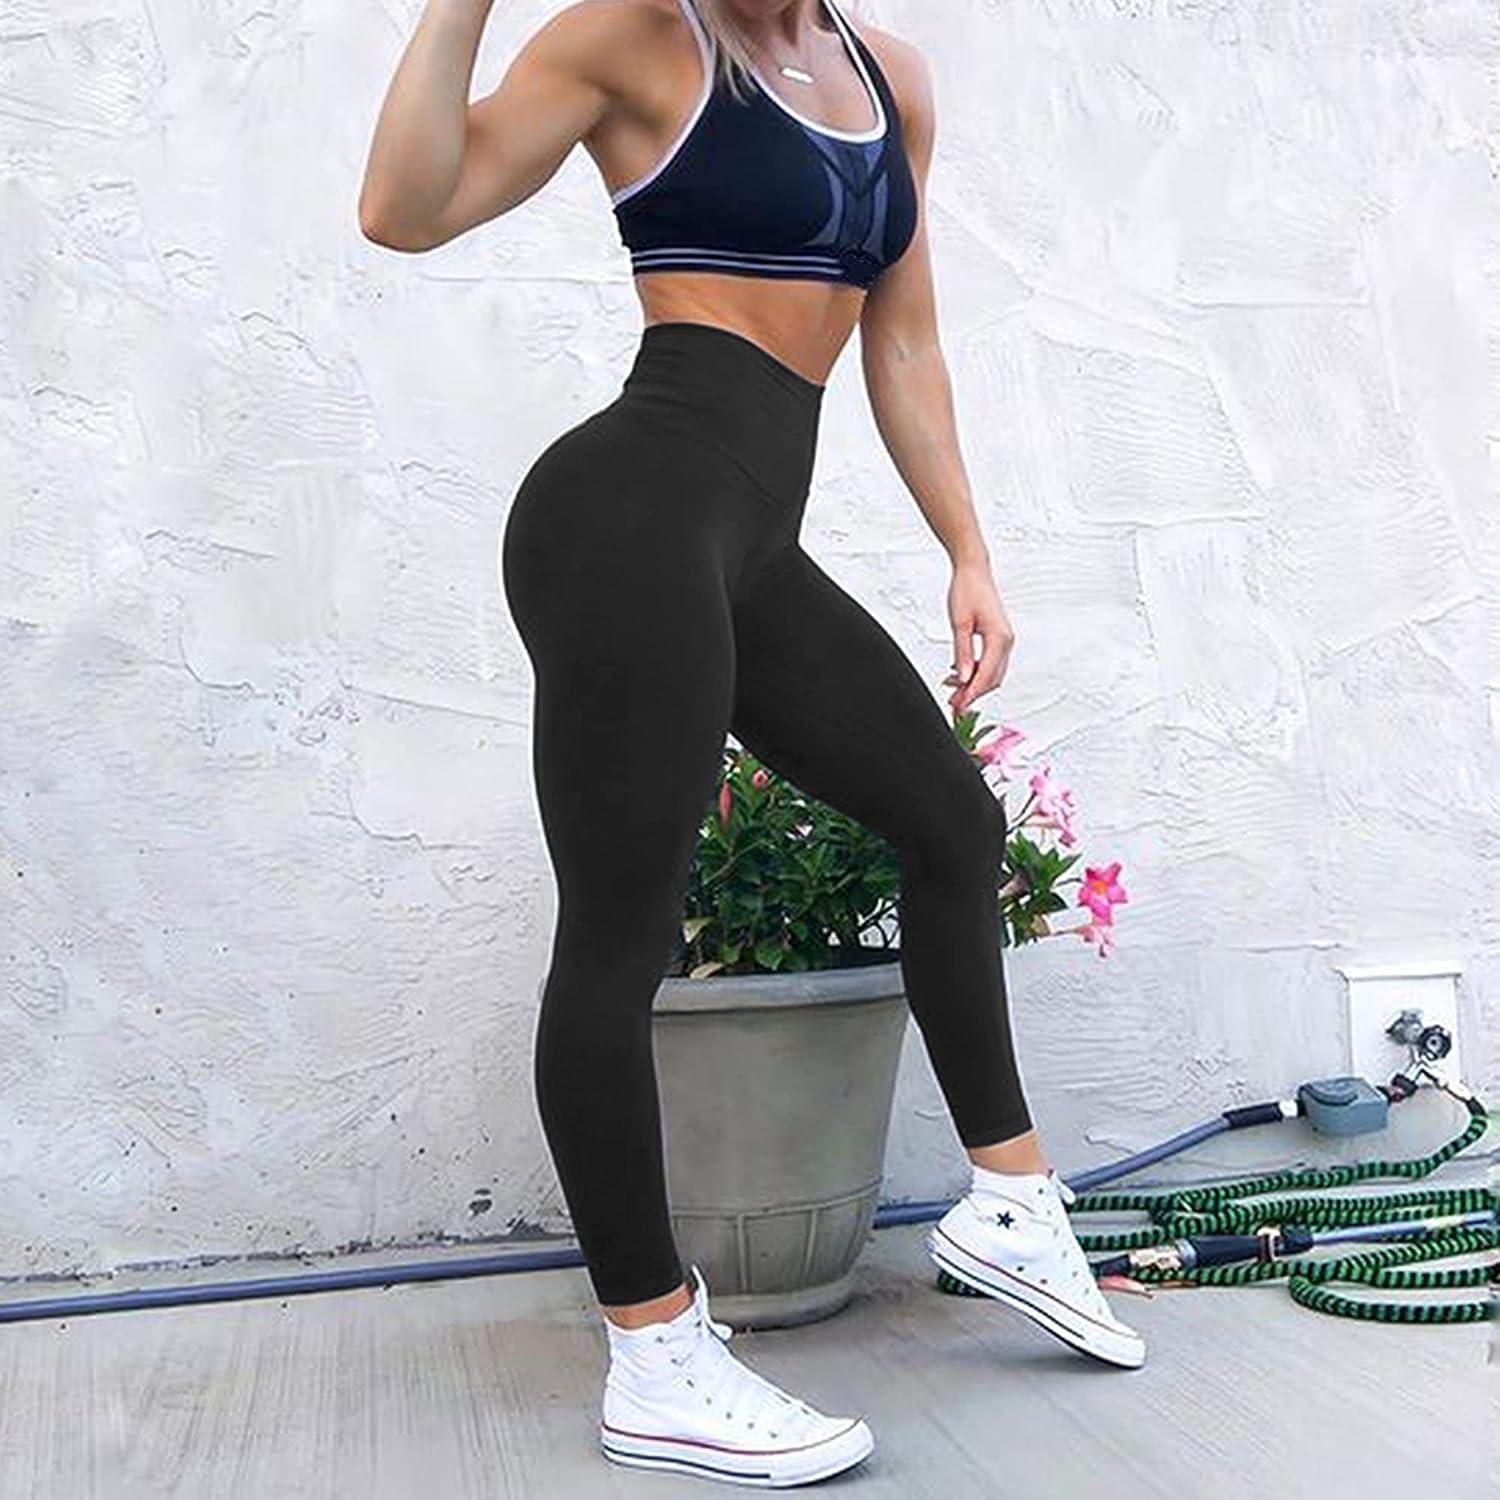 MOOSLOVER Seamless Butt Lifting Workout Leggings for Women High